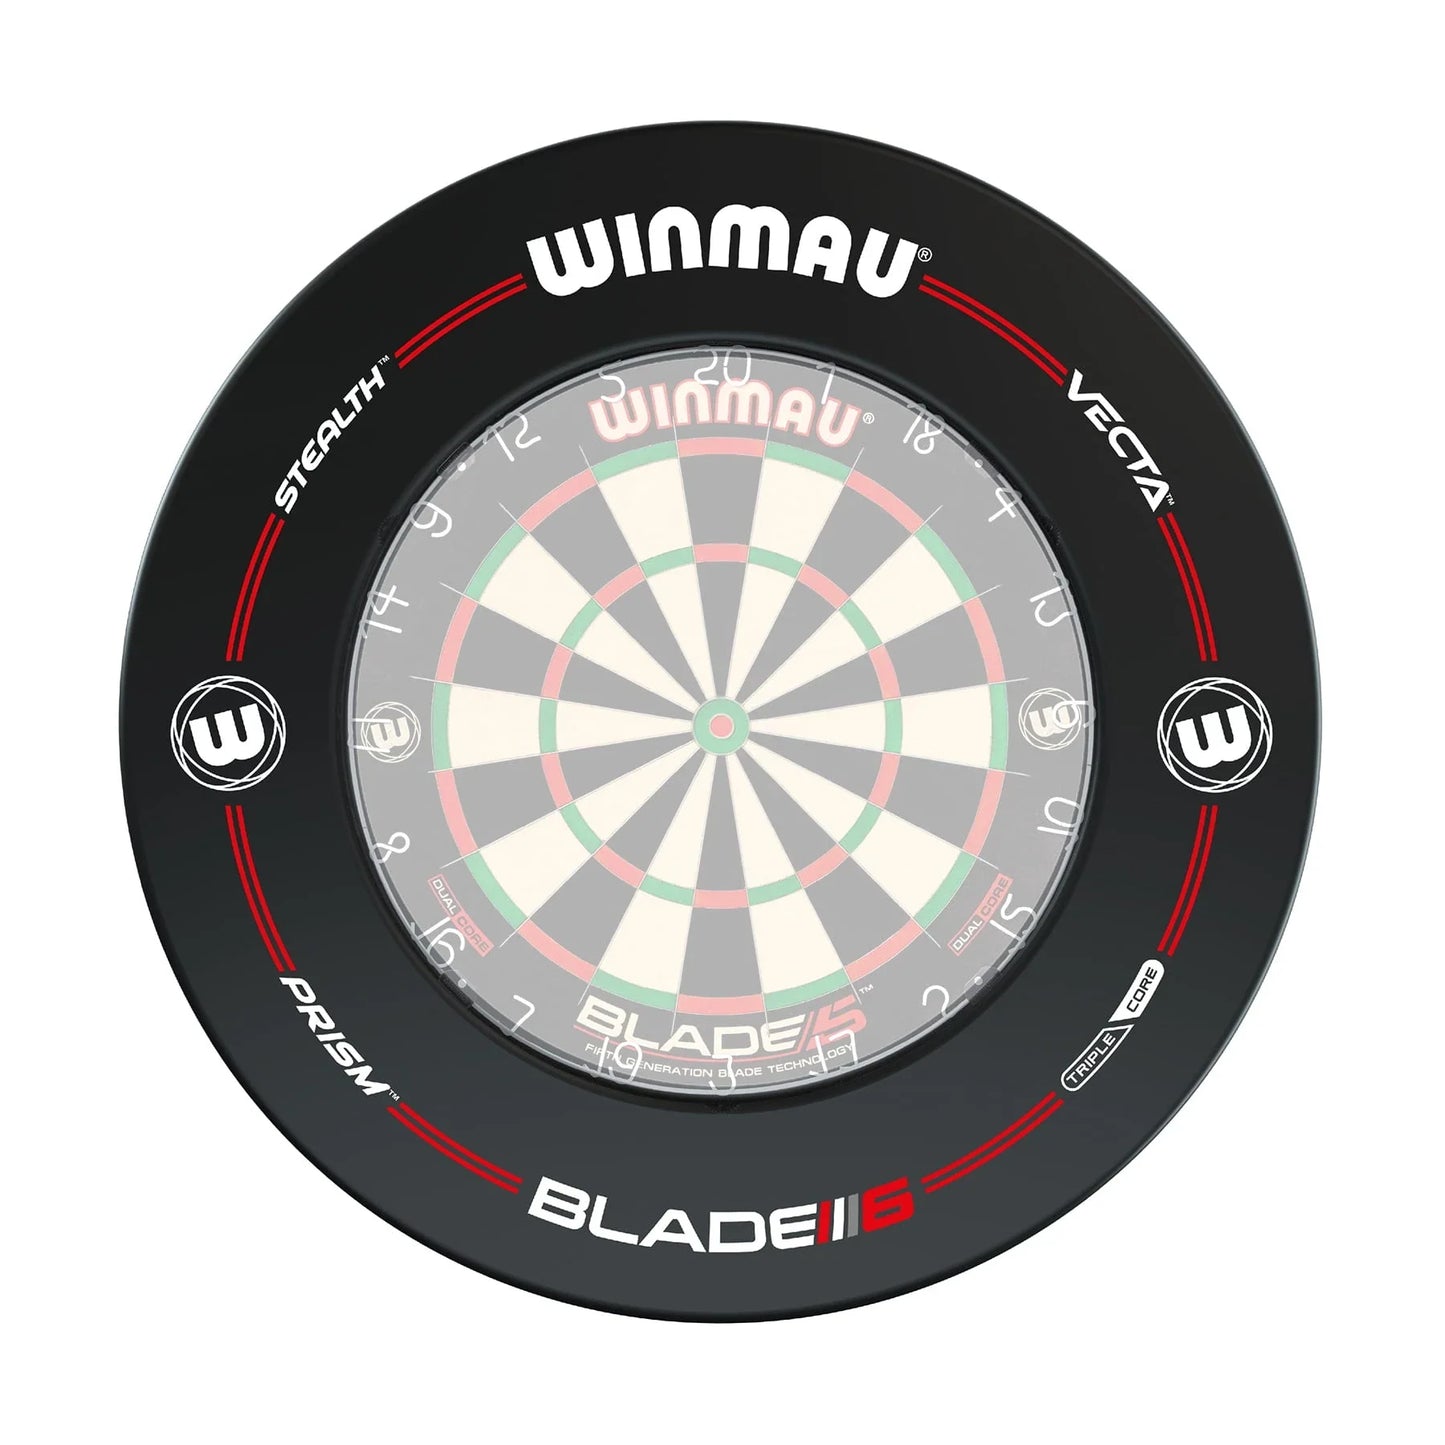 Winmau Blade 6 Black Dartboard Surround